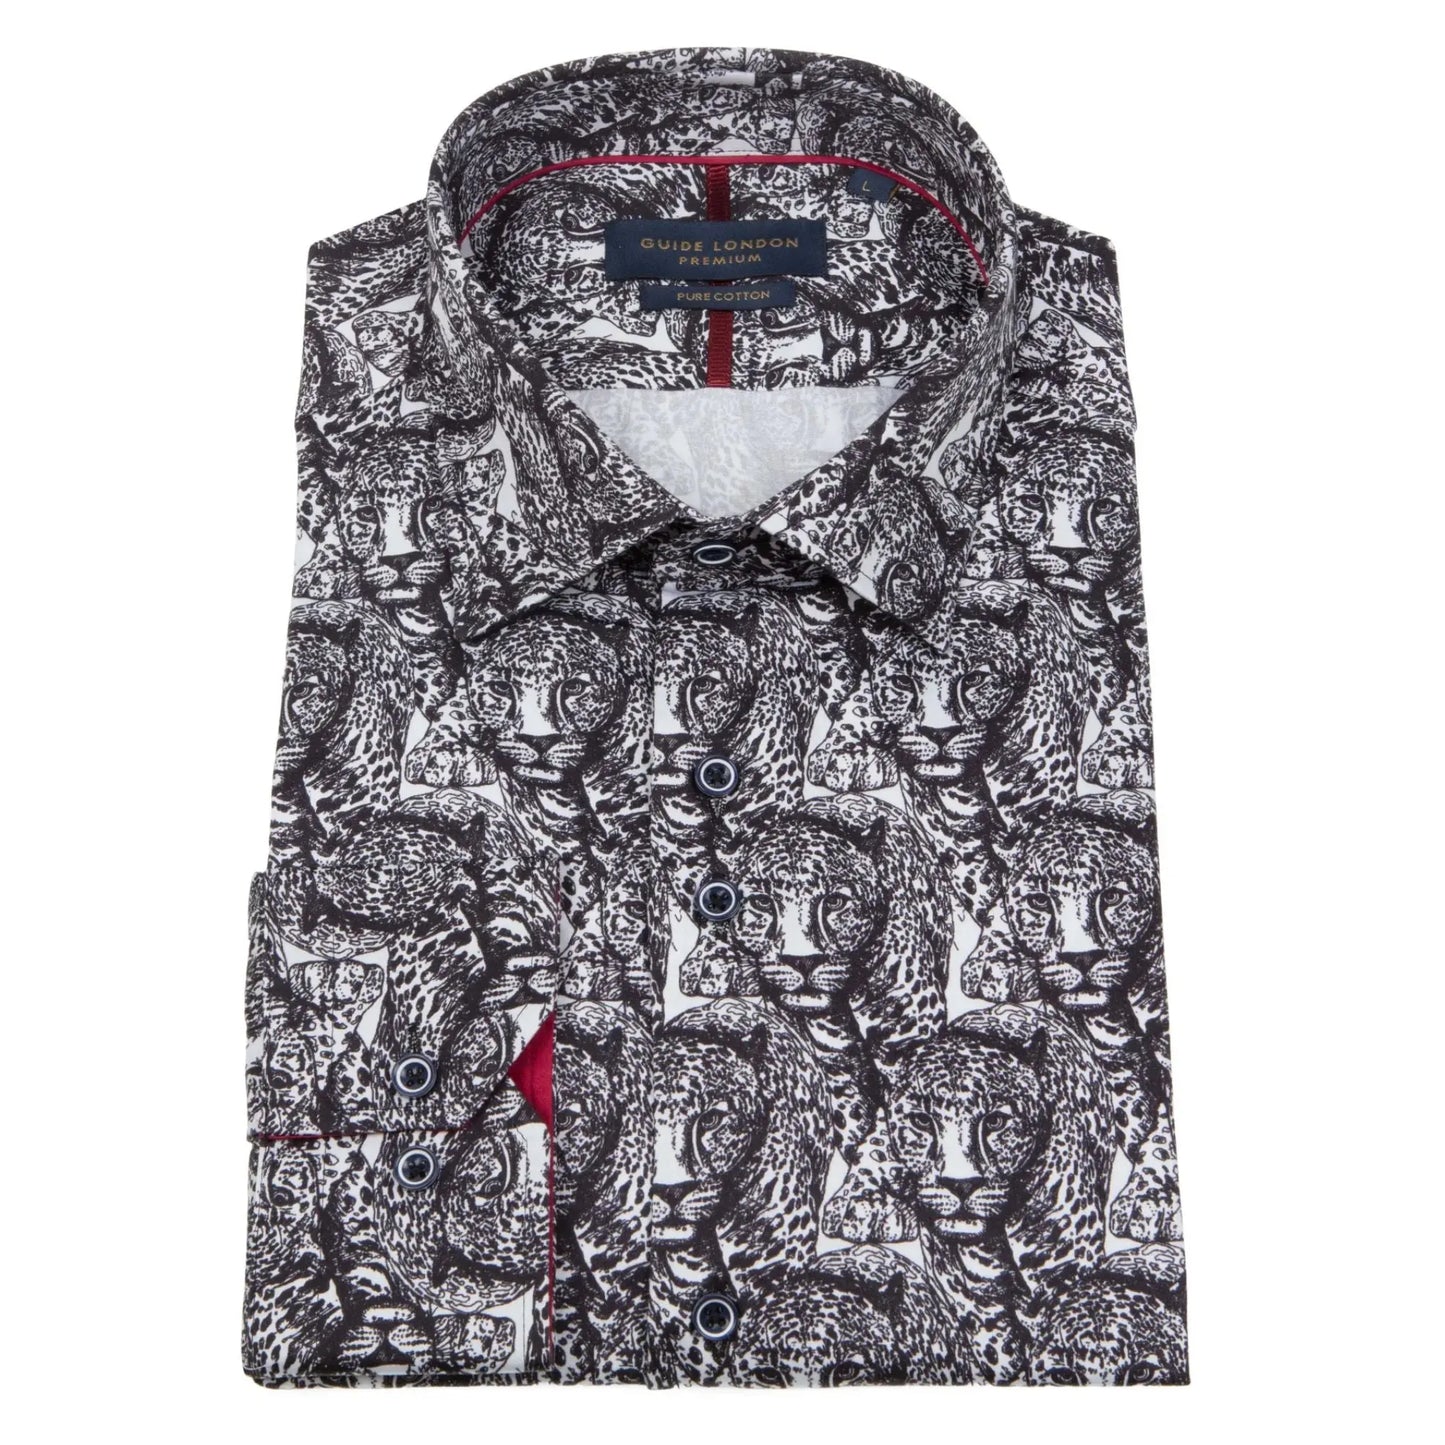 Buy Guide London Leopard Animal Print Shirt - White / Navy | Long-Sleeved Shirtss at Woven Durham